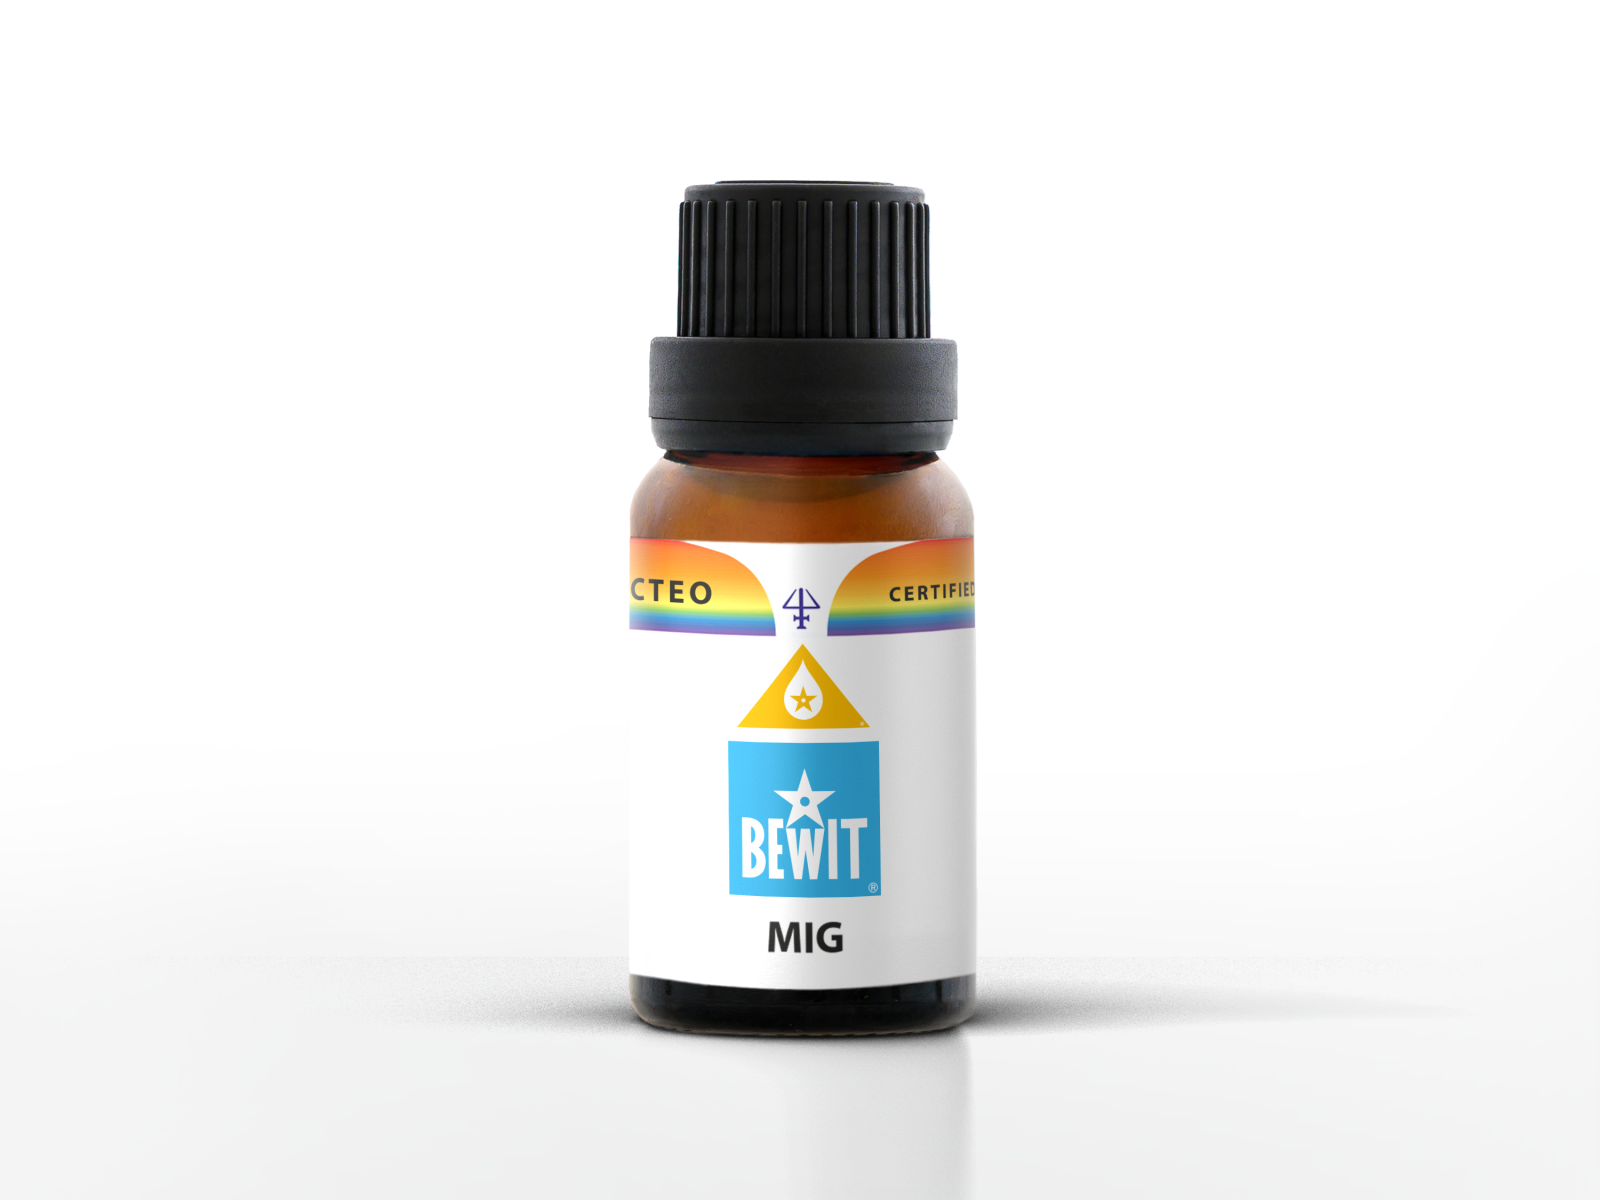 BEWIT MIG - Blend of essential oils - 1